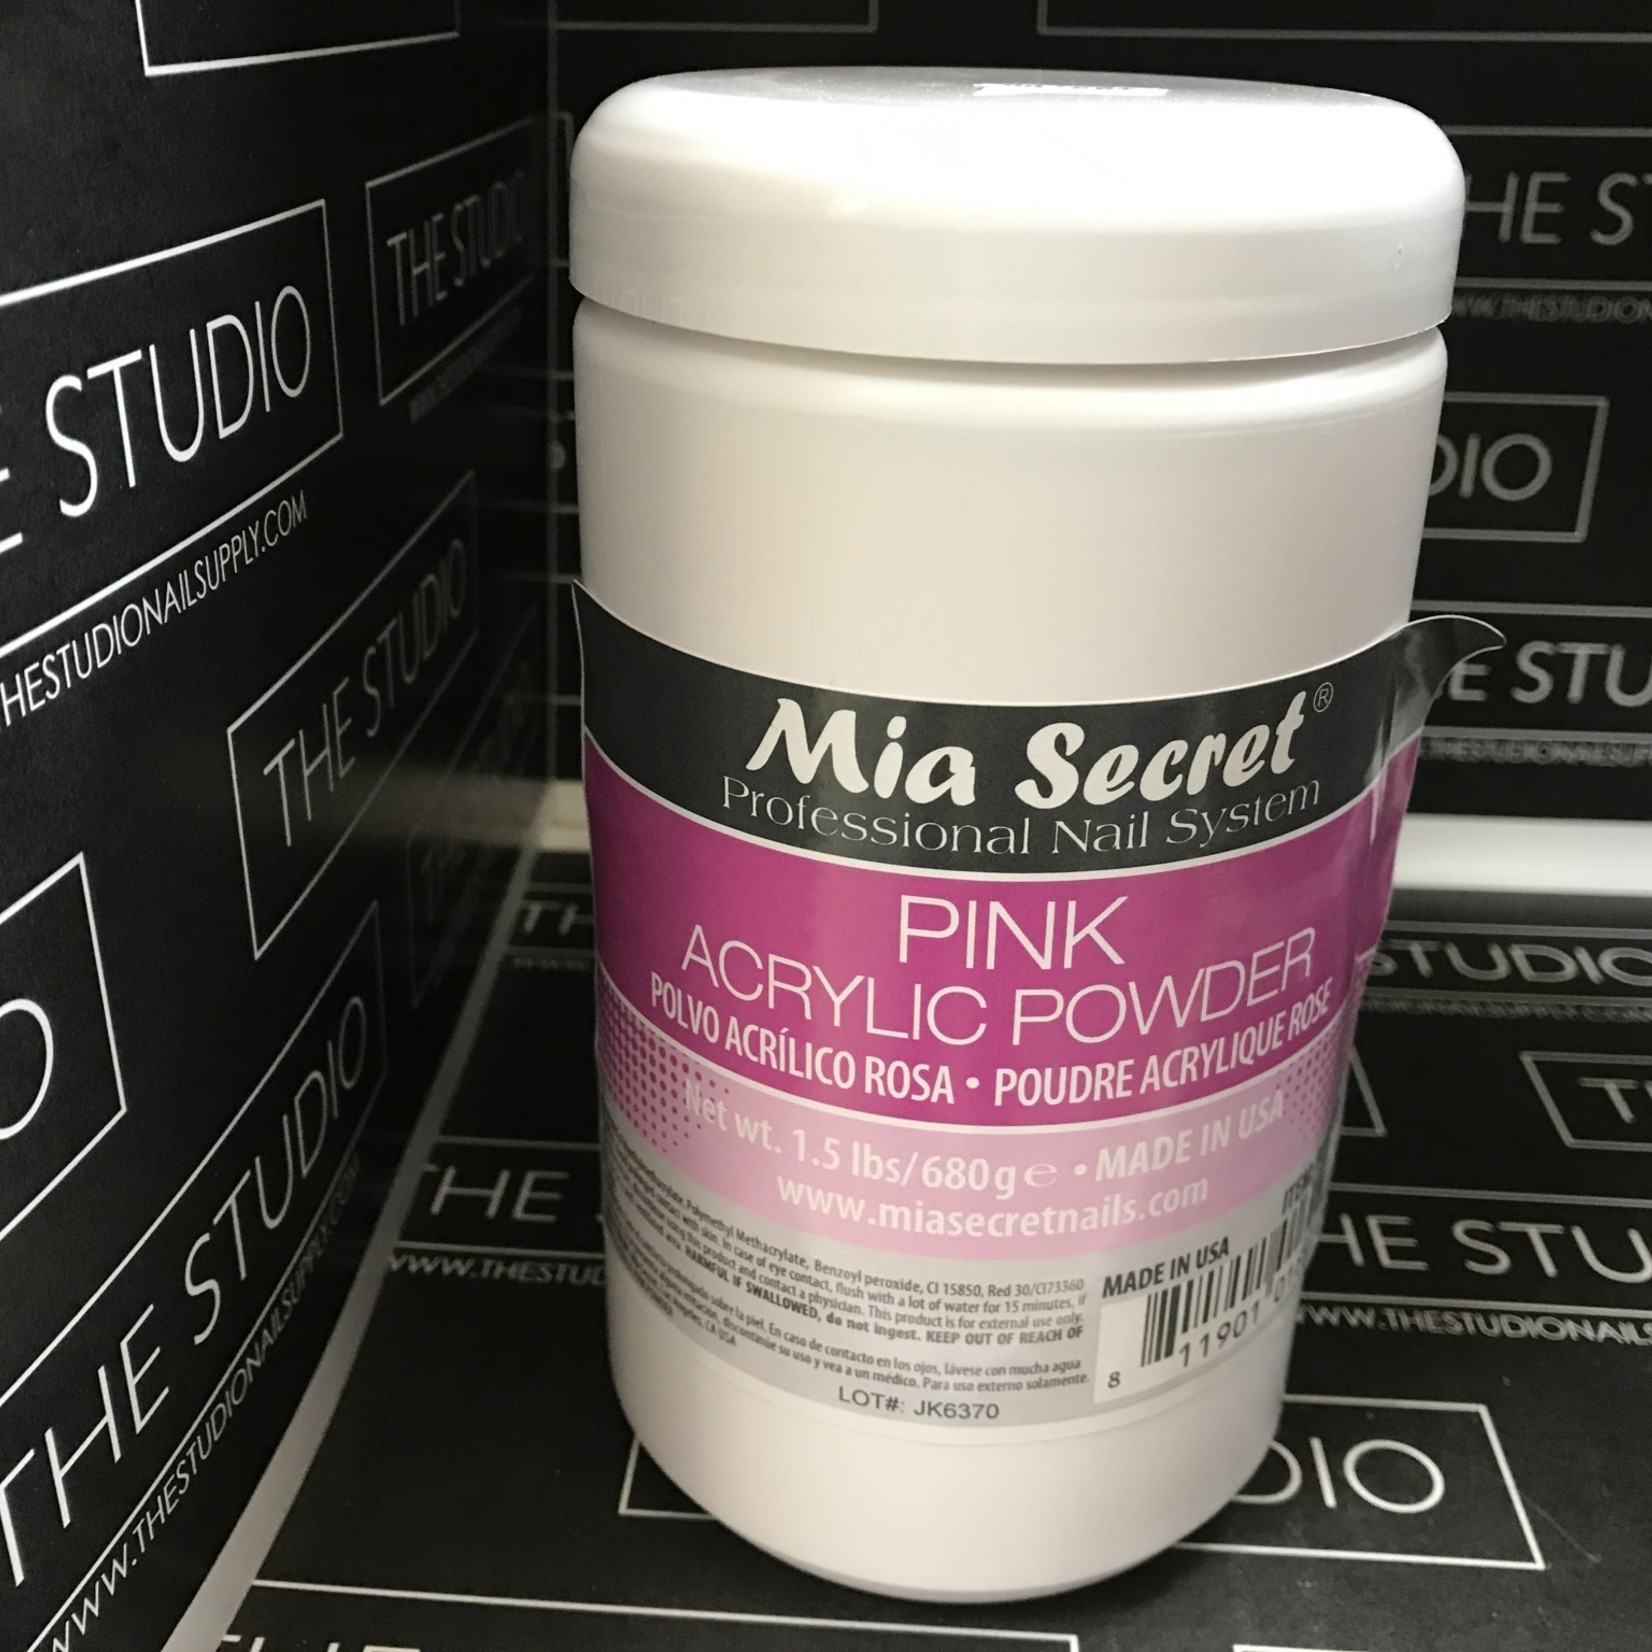 Mia Secret Mia Secret - Acrylic Powder - Pink -